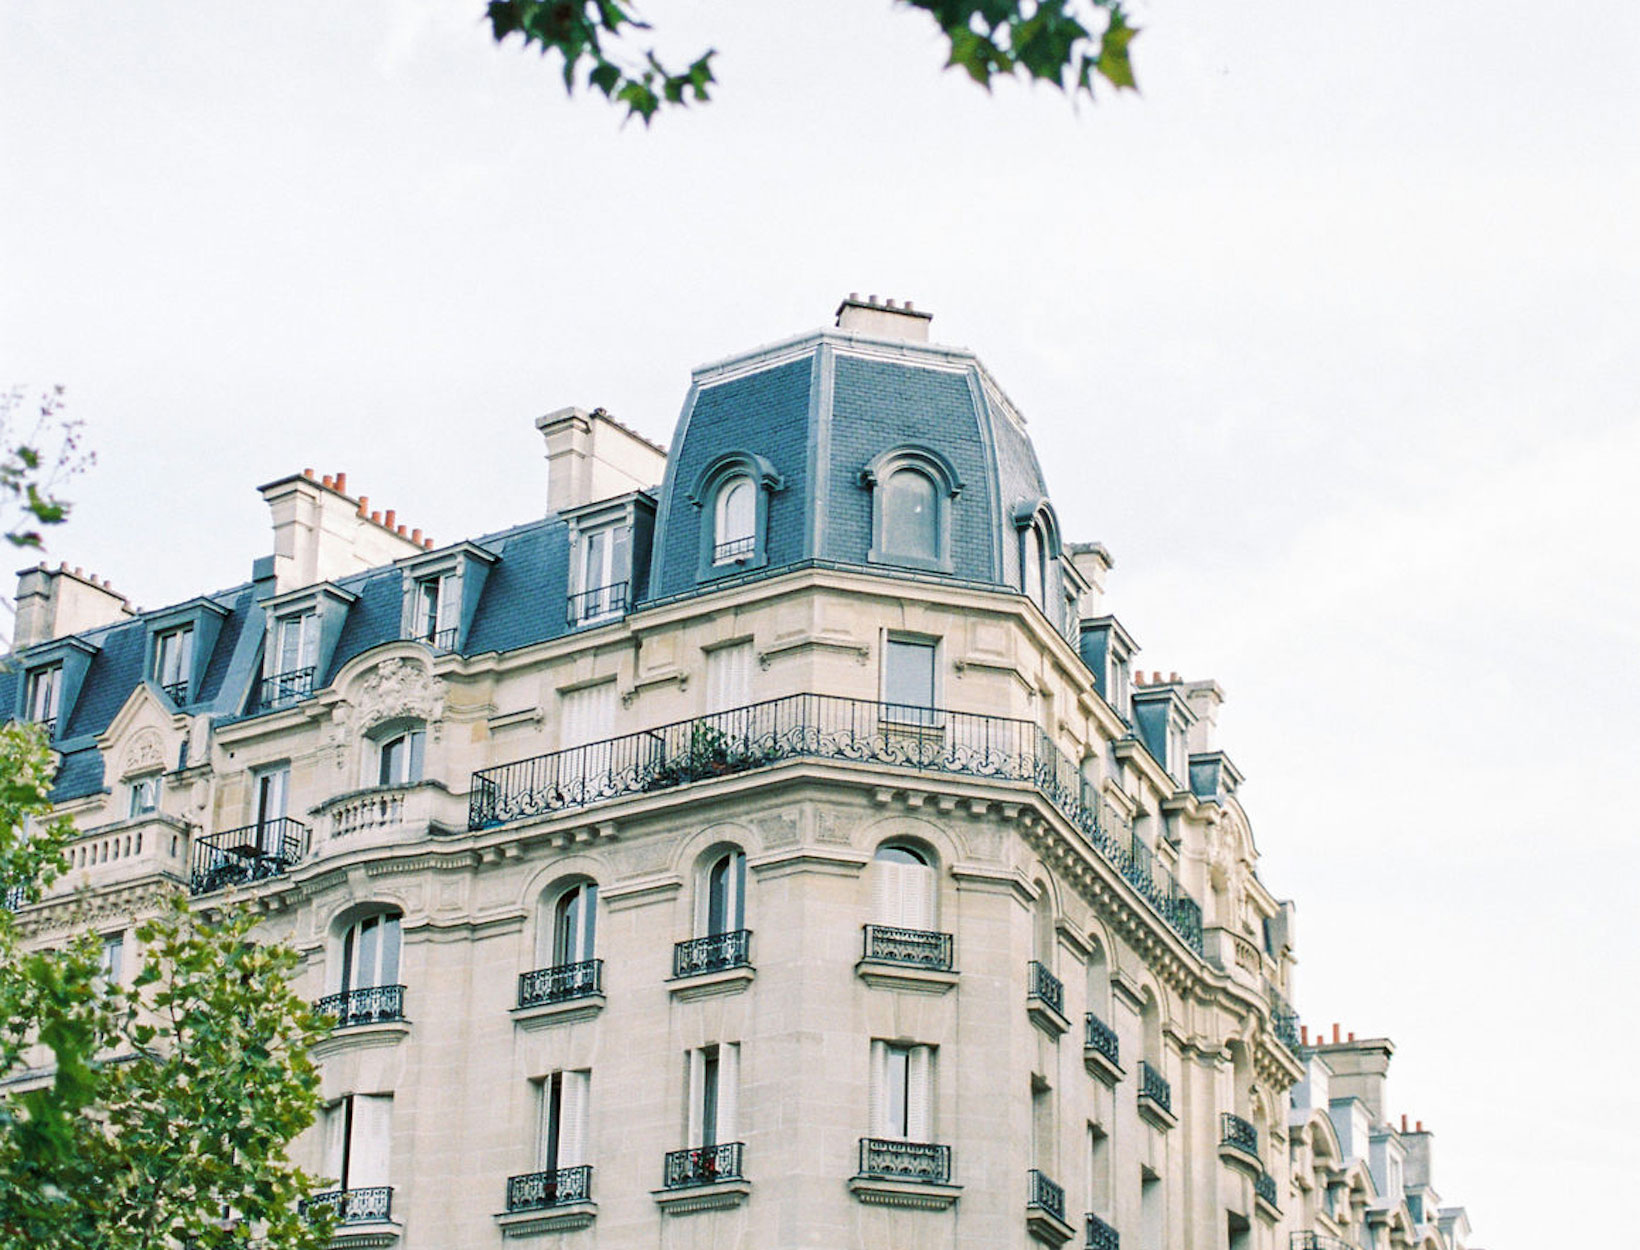 Louis Vuitton's first luxury hotel is set to open in Paris